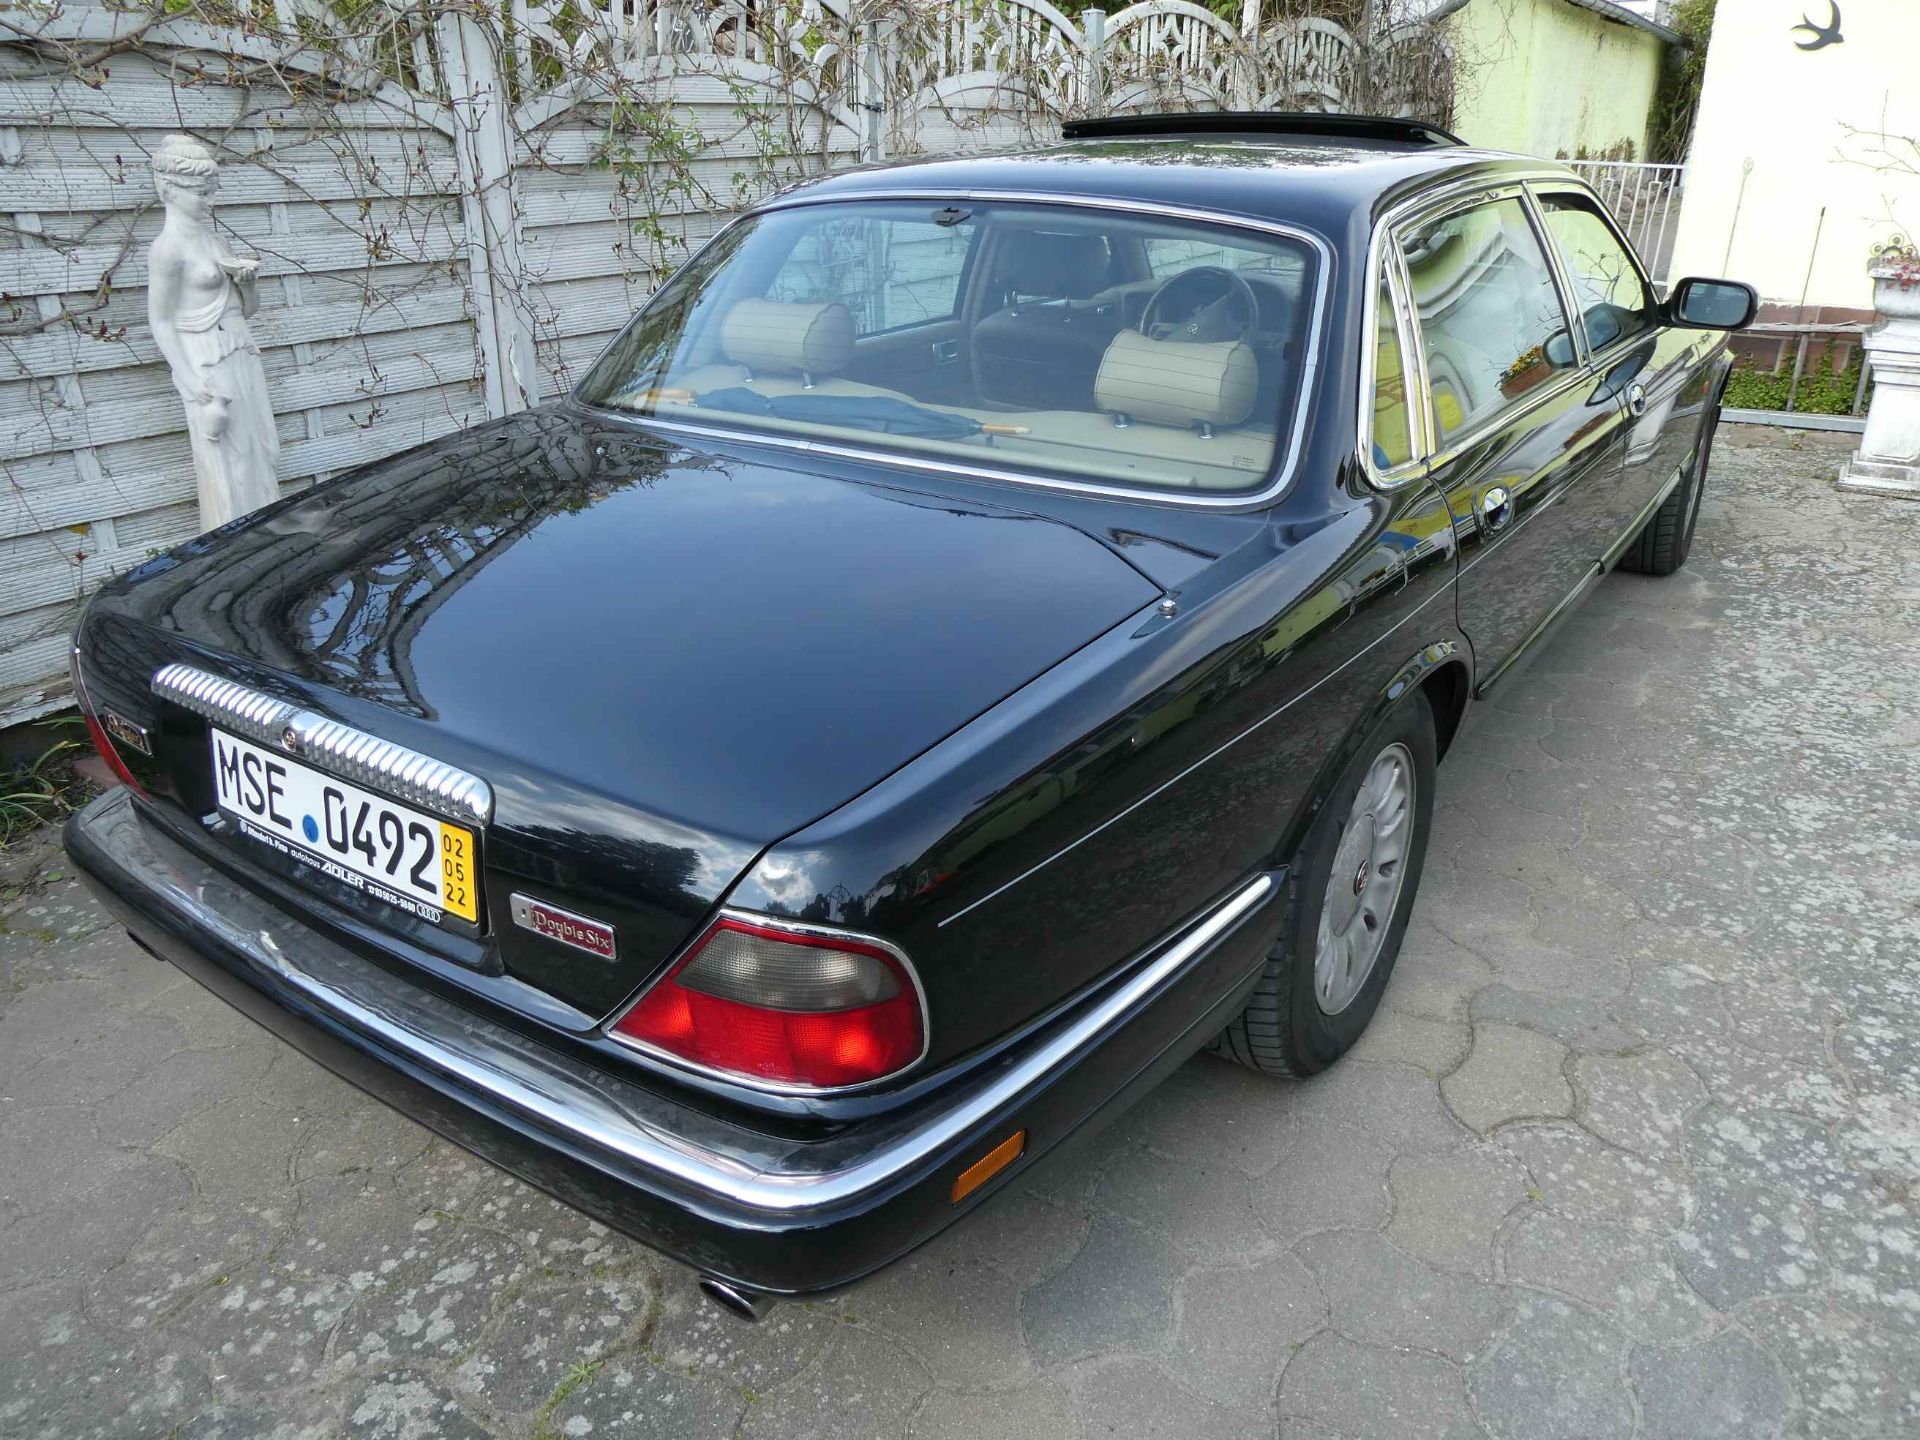 Jaguar Daimler XJ12, Baureihe X300, Langversion - Image 2 of 21